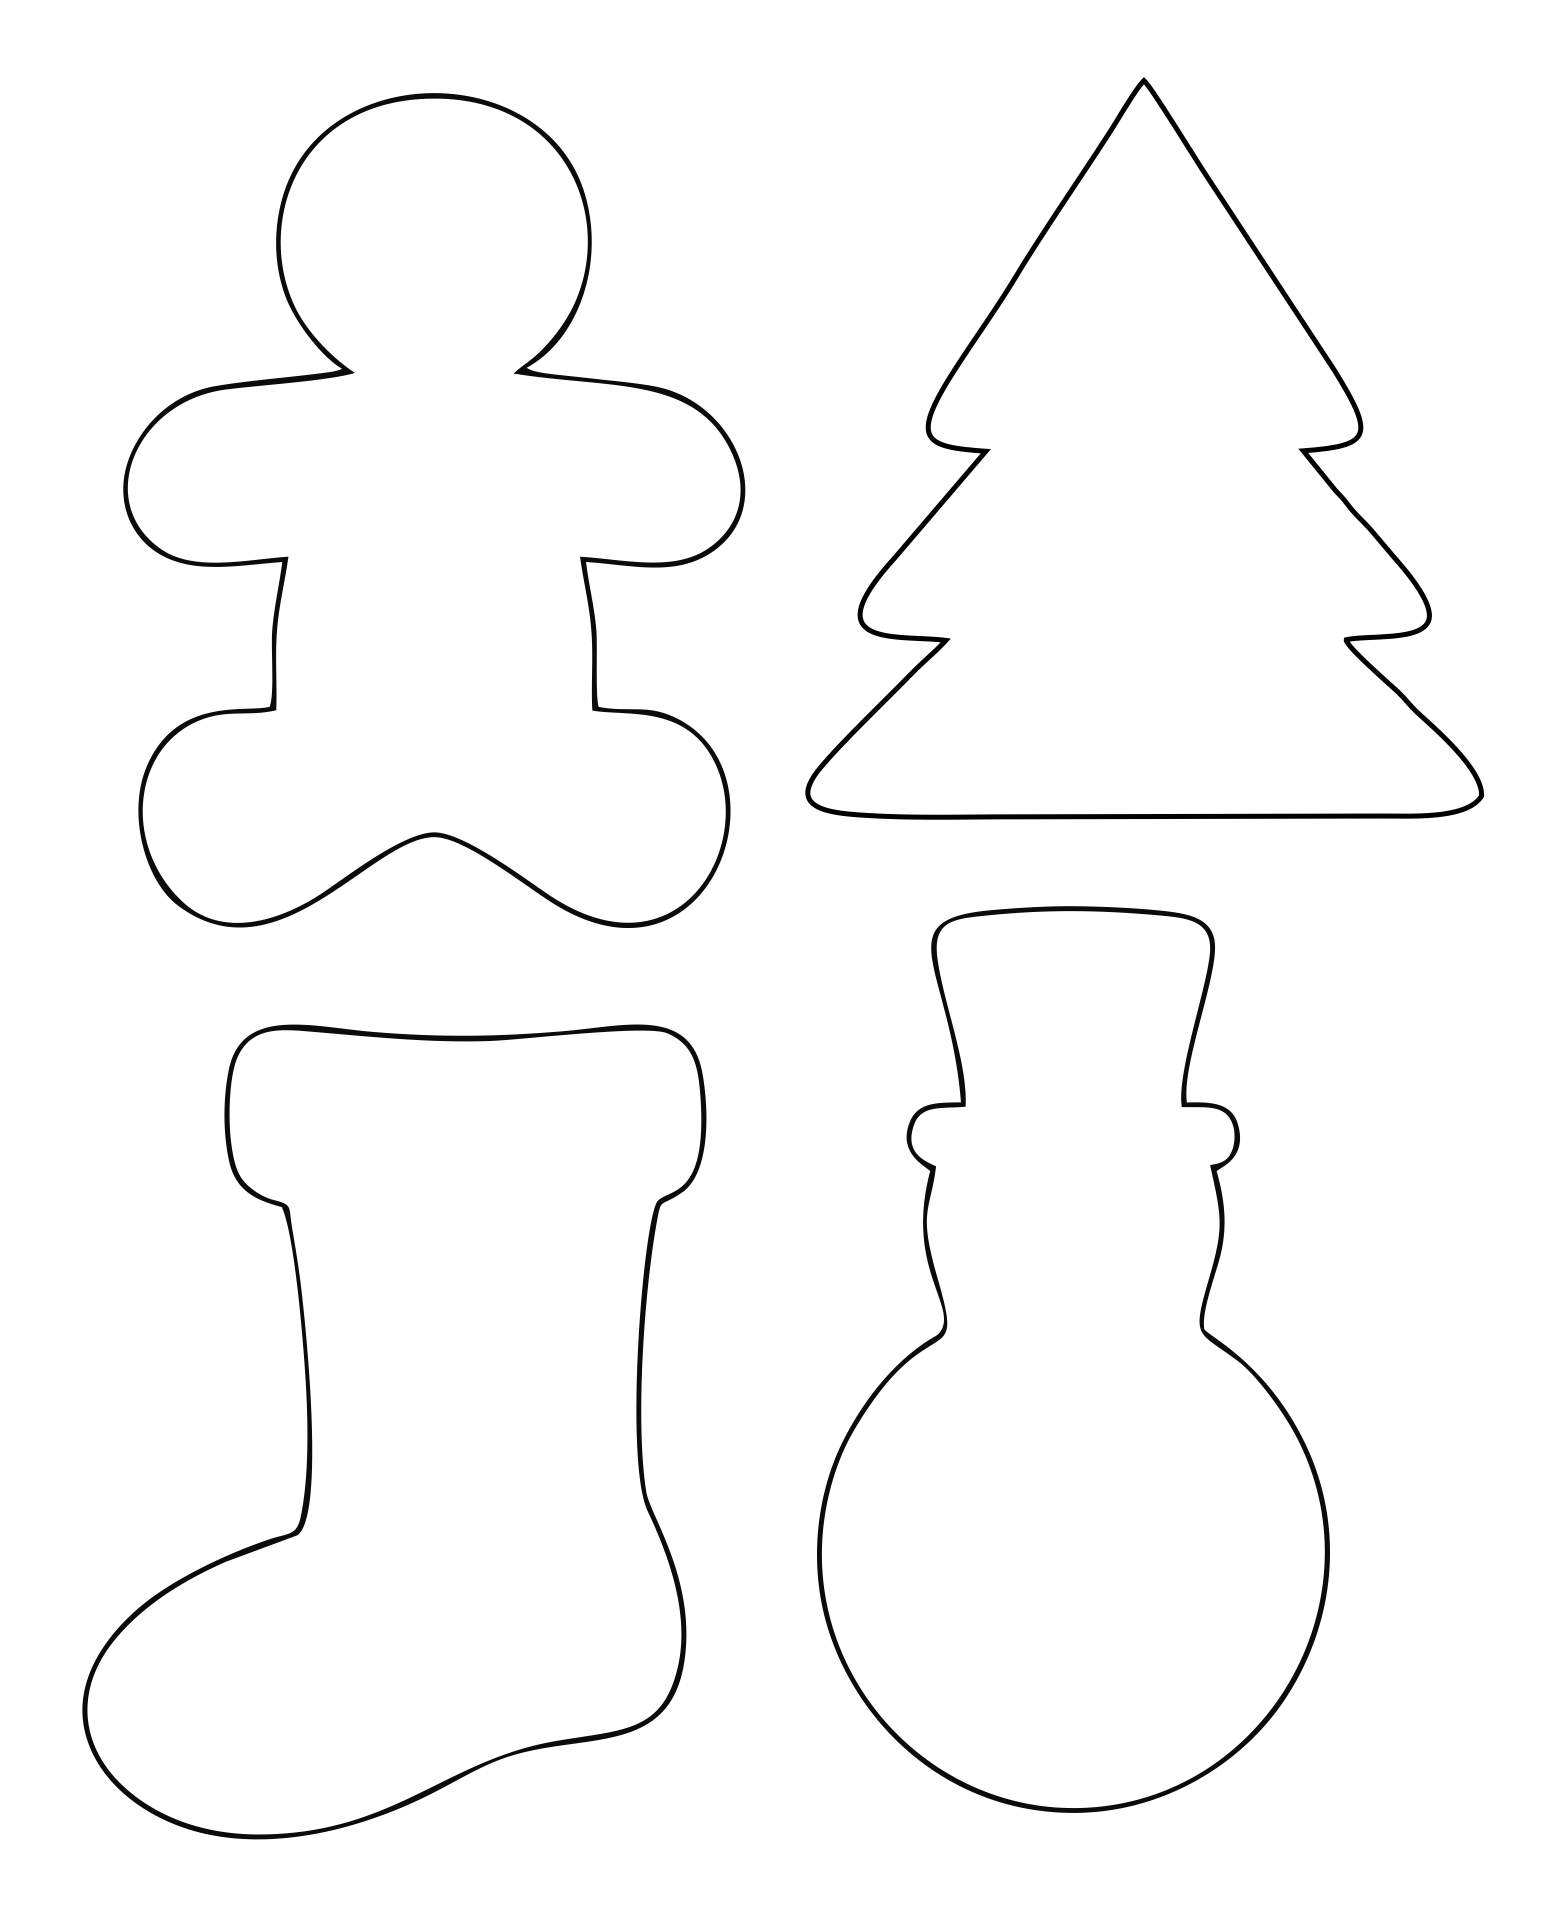 10 Best Free Printable Christmas Ornament Shapes - printablee.com